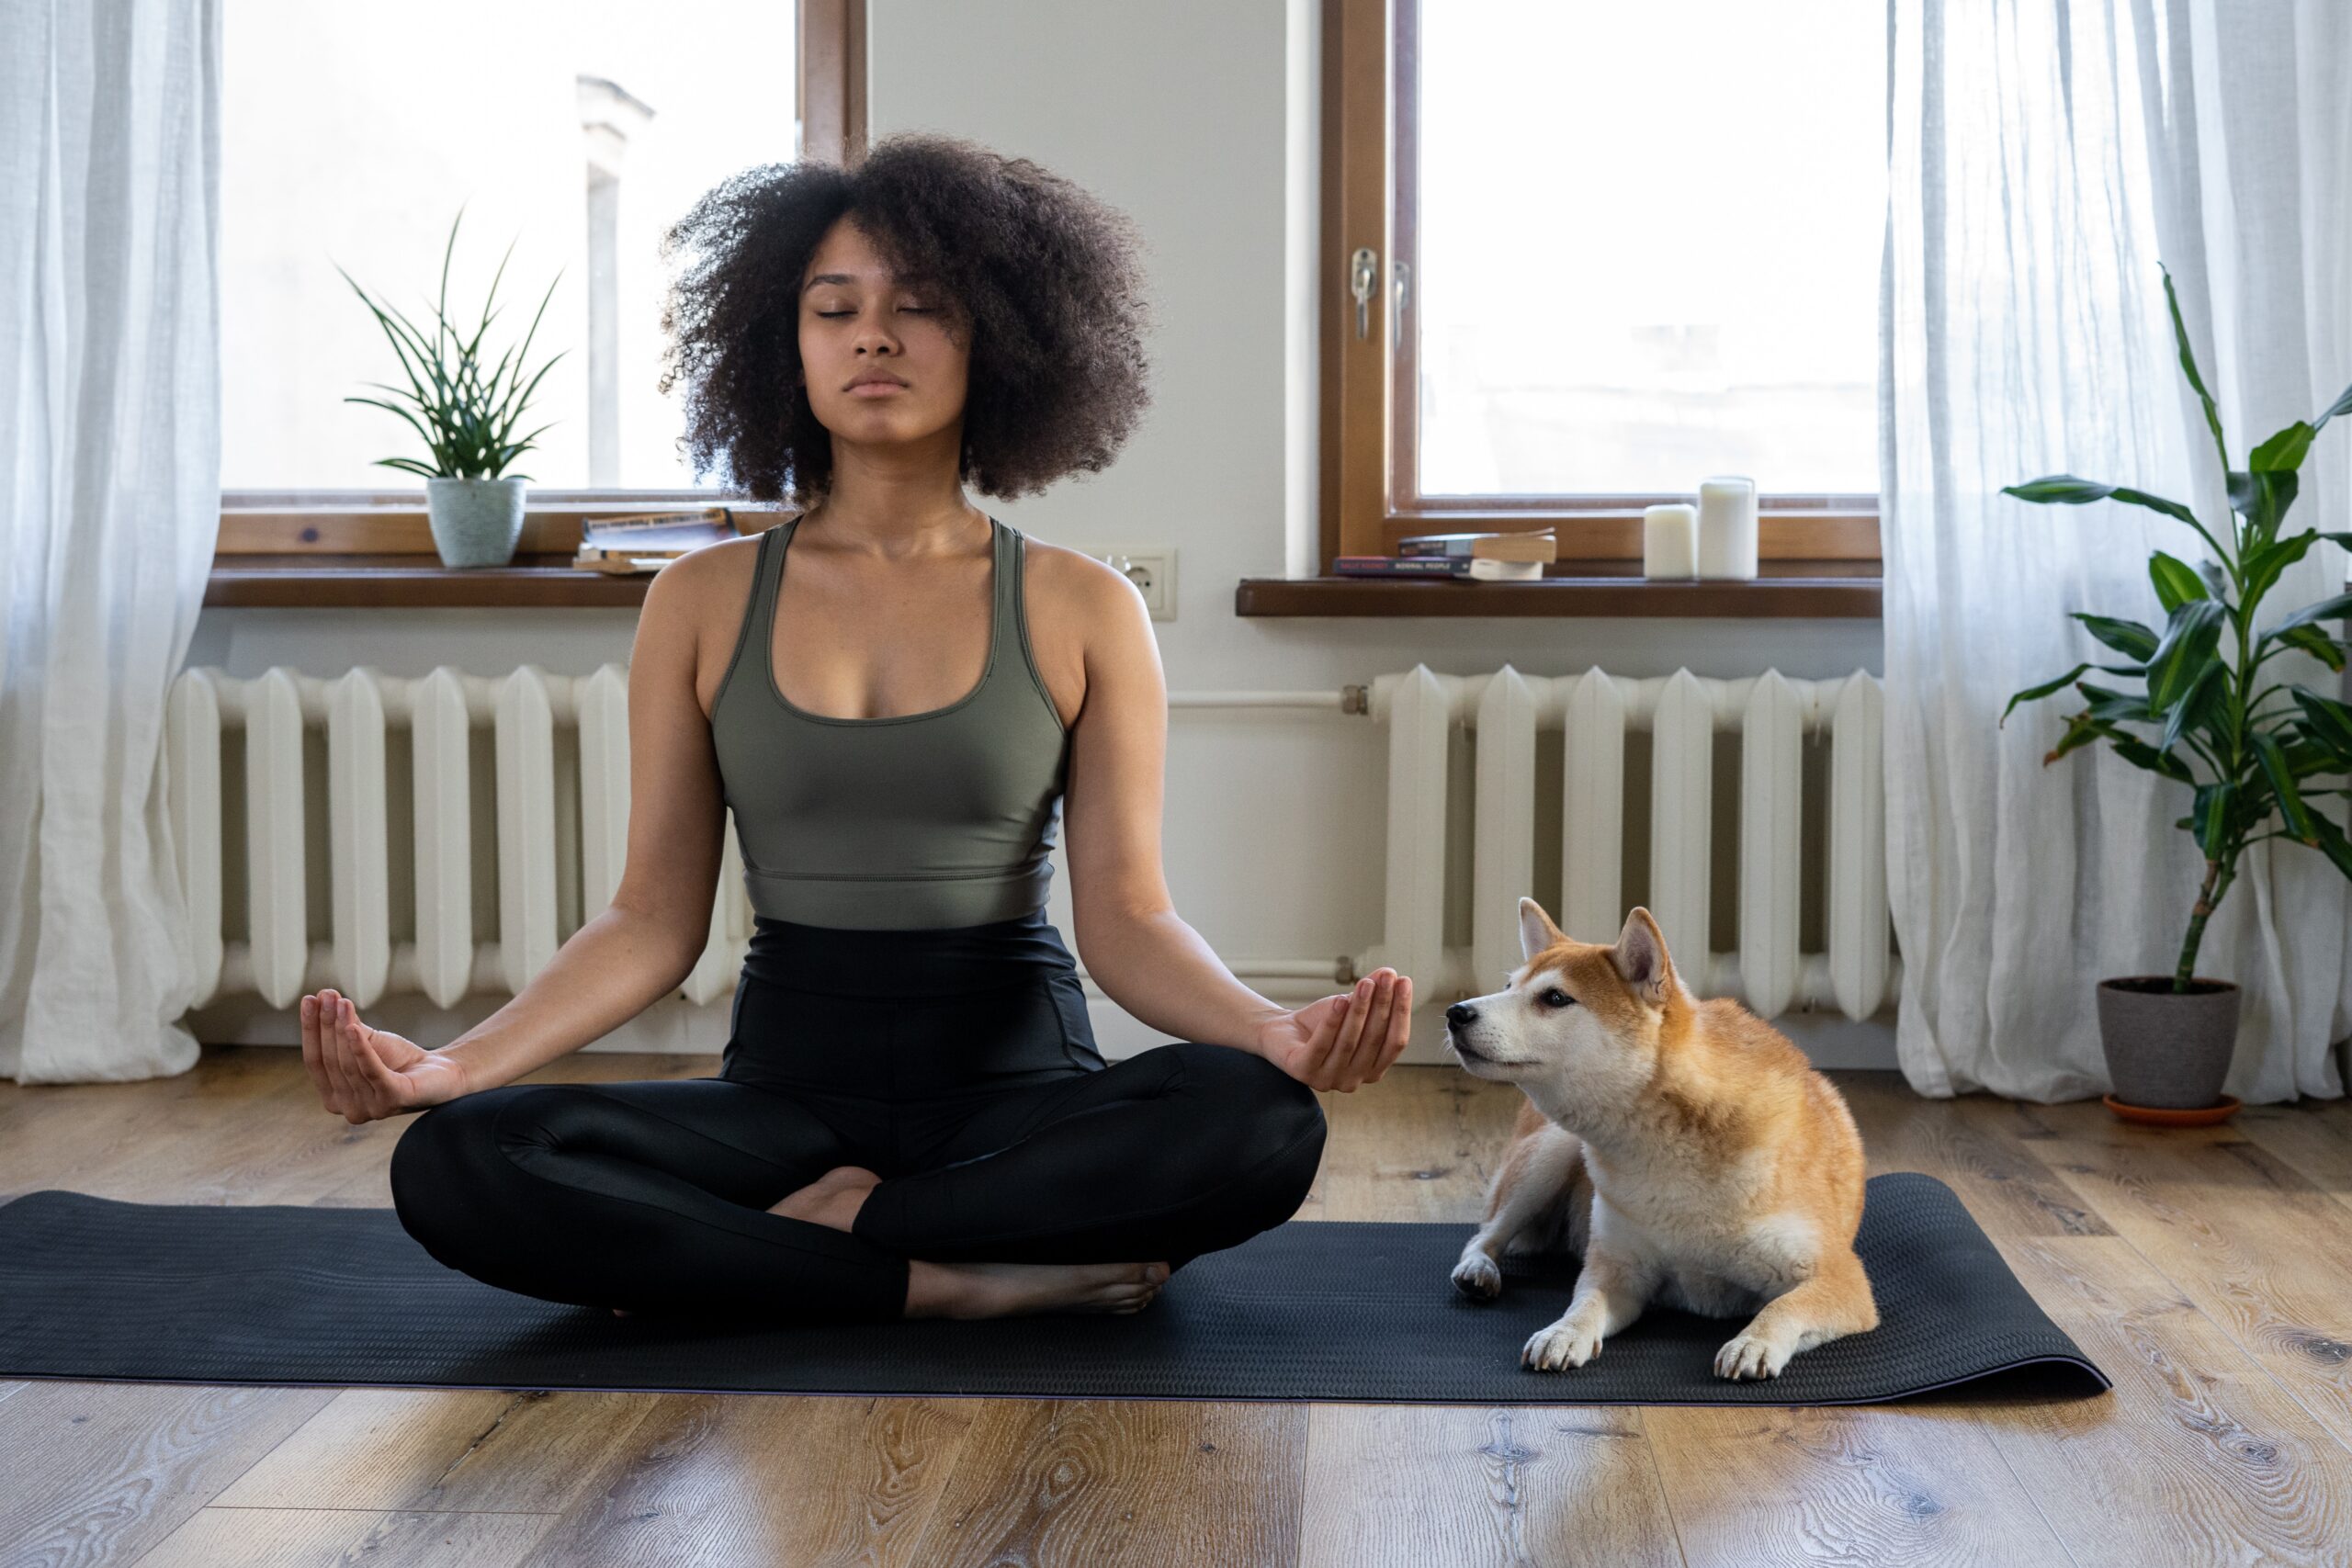 A woman doing yoga poses on a yoga mat